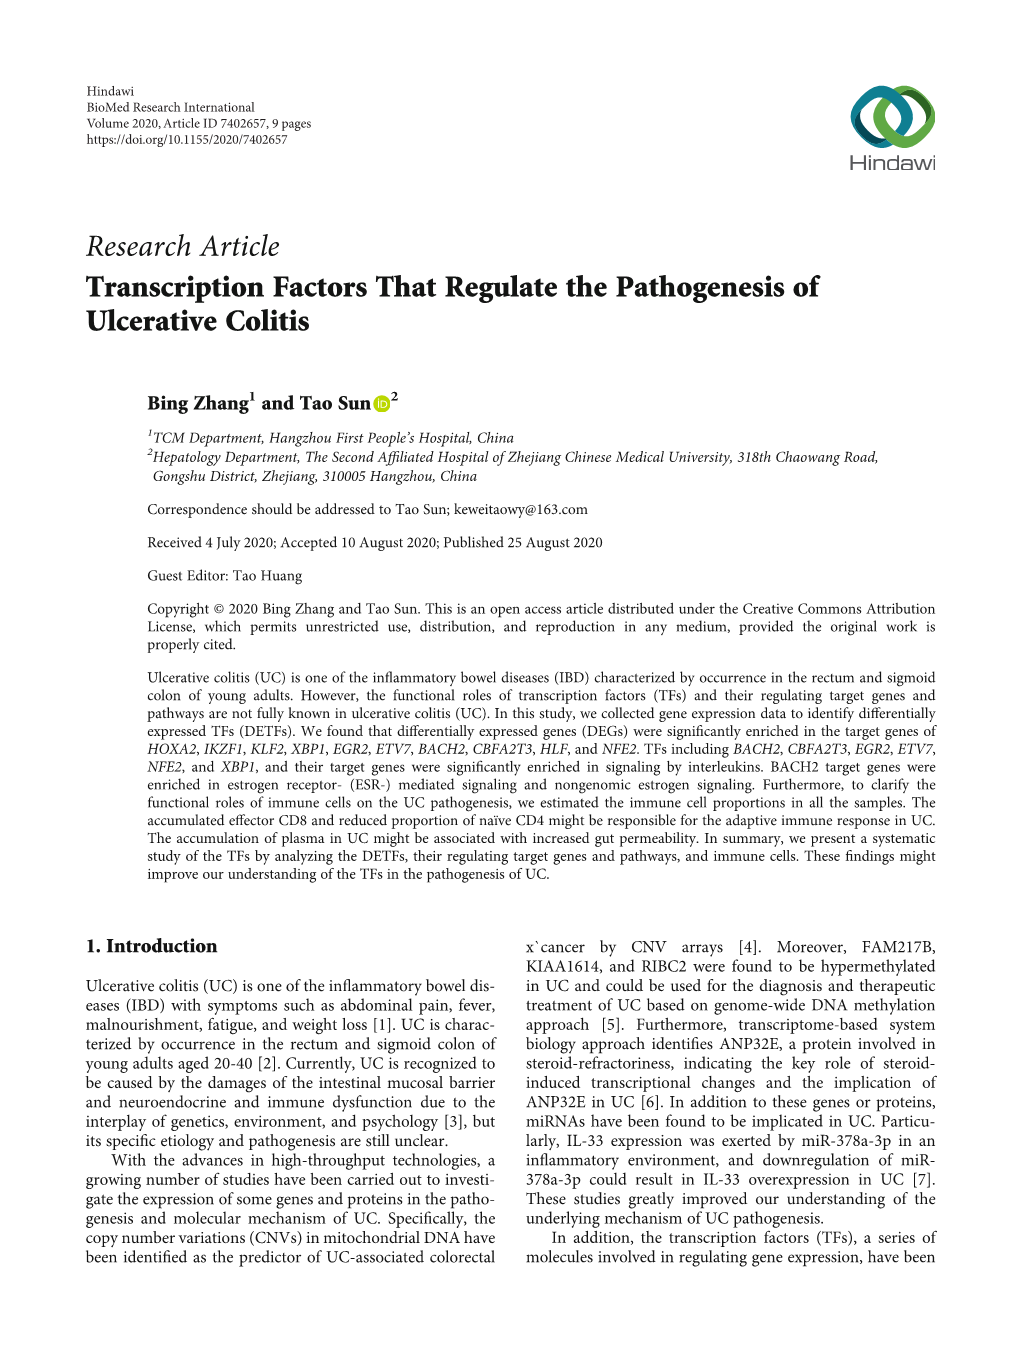 Transcription Factors That Regulate the Pathogenesis of Ulcerative Colitis